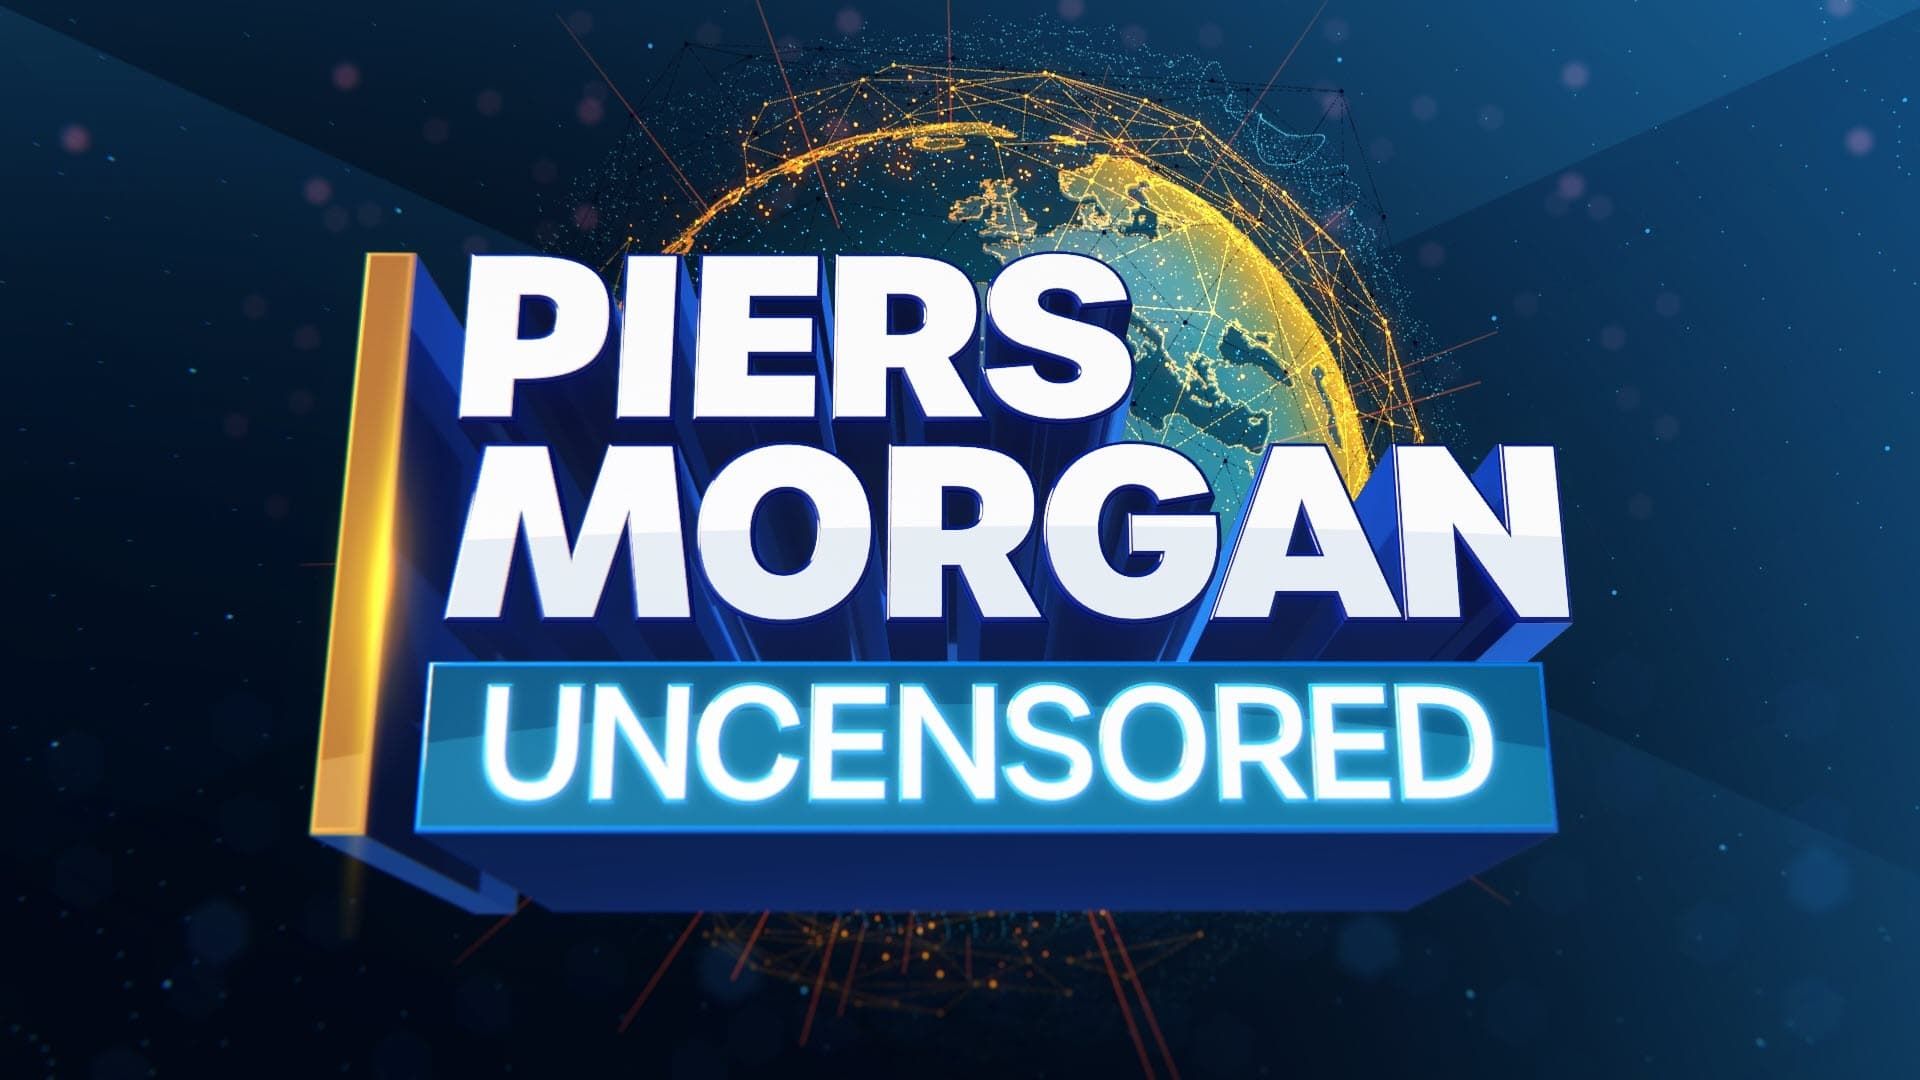 Piers Morgan Uncensored background